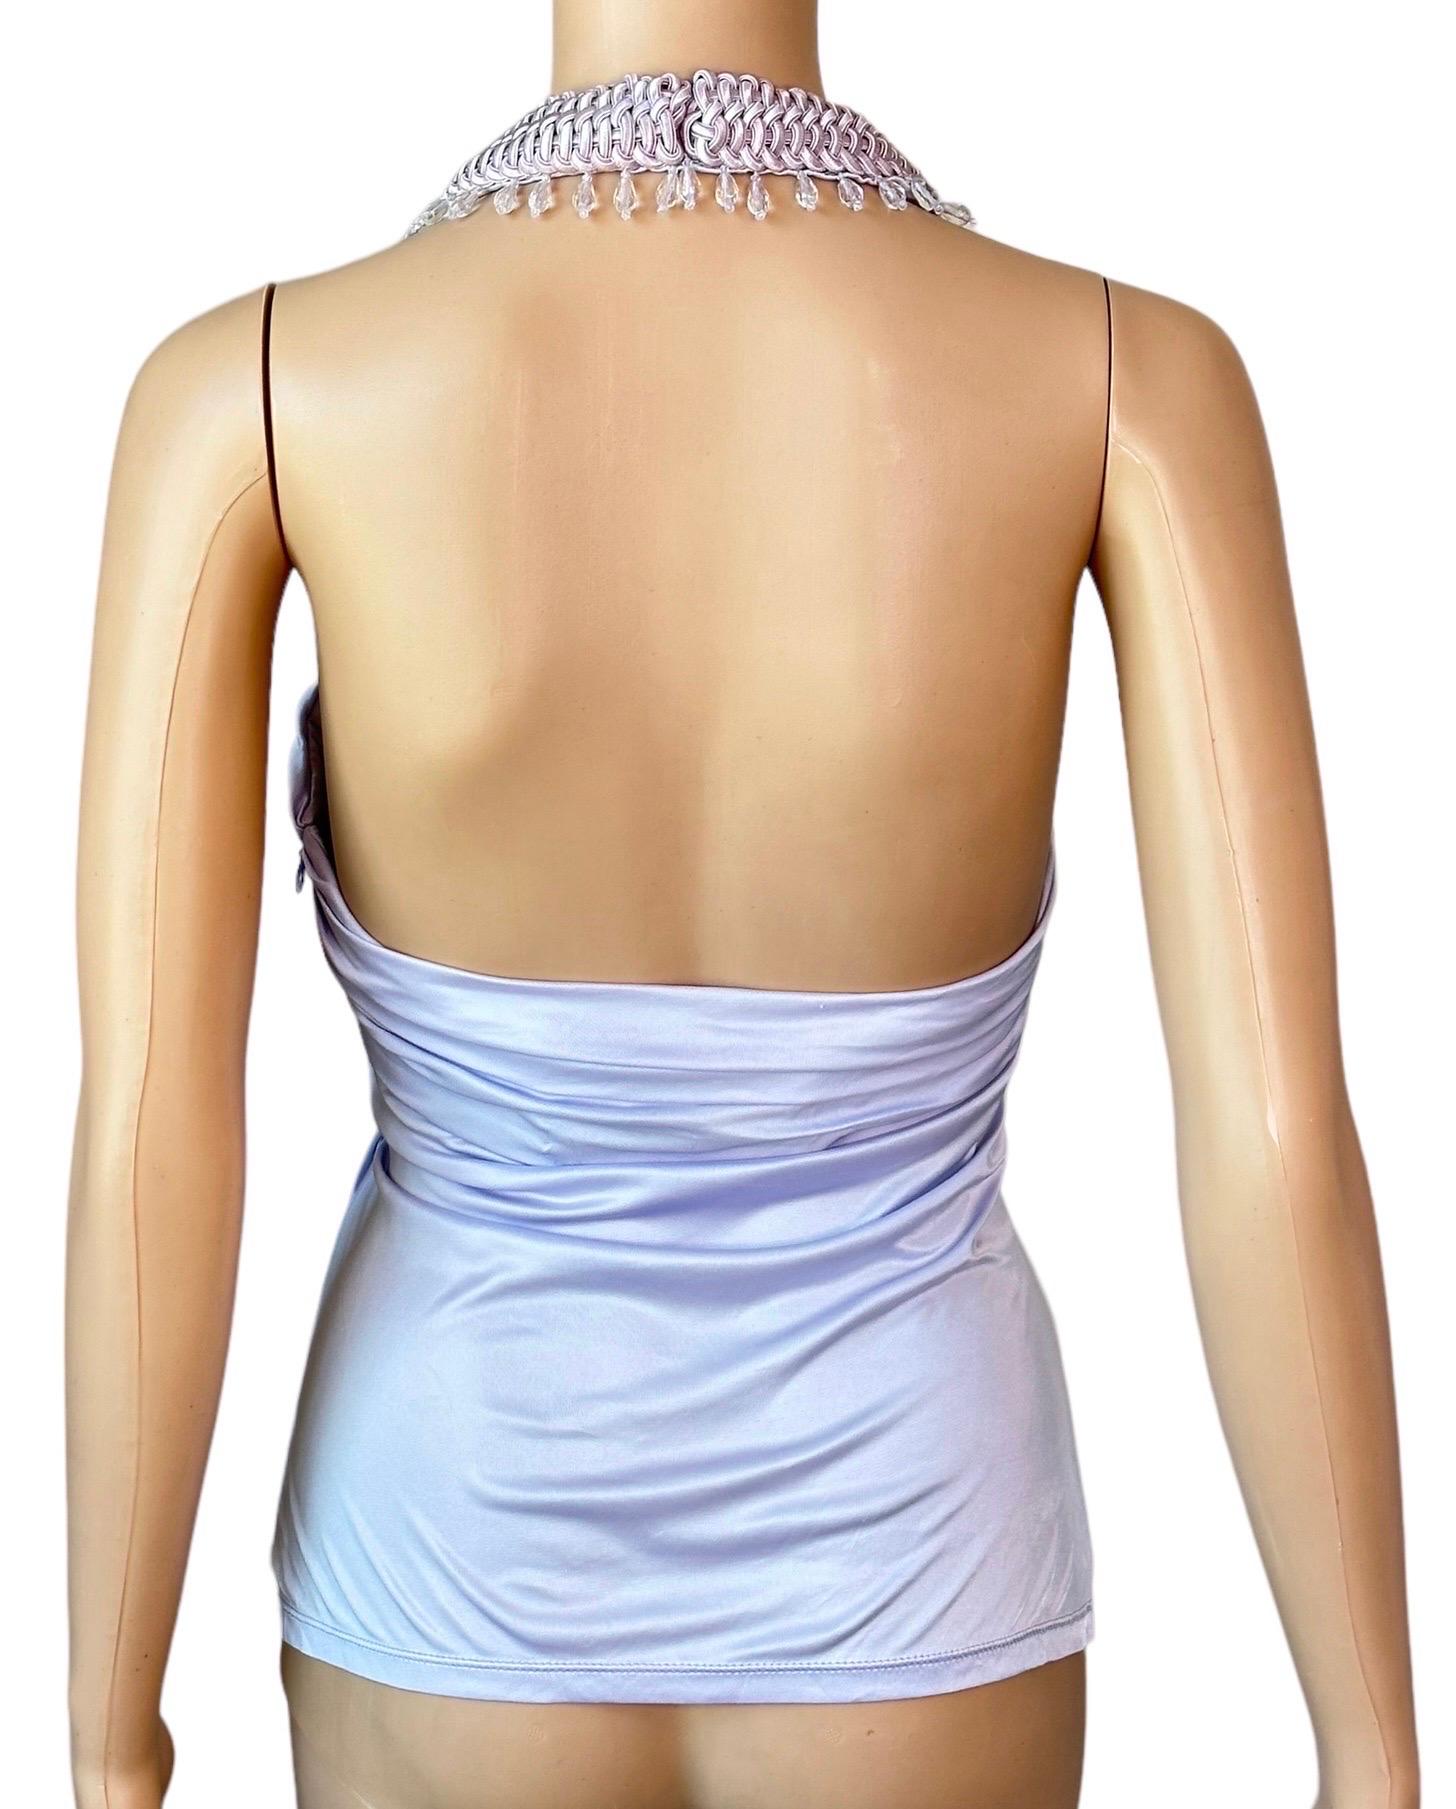 Women's or Men's New Versace S/S 2006 Runway Crystal Embellished Halter Top For Sale